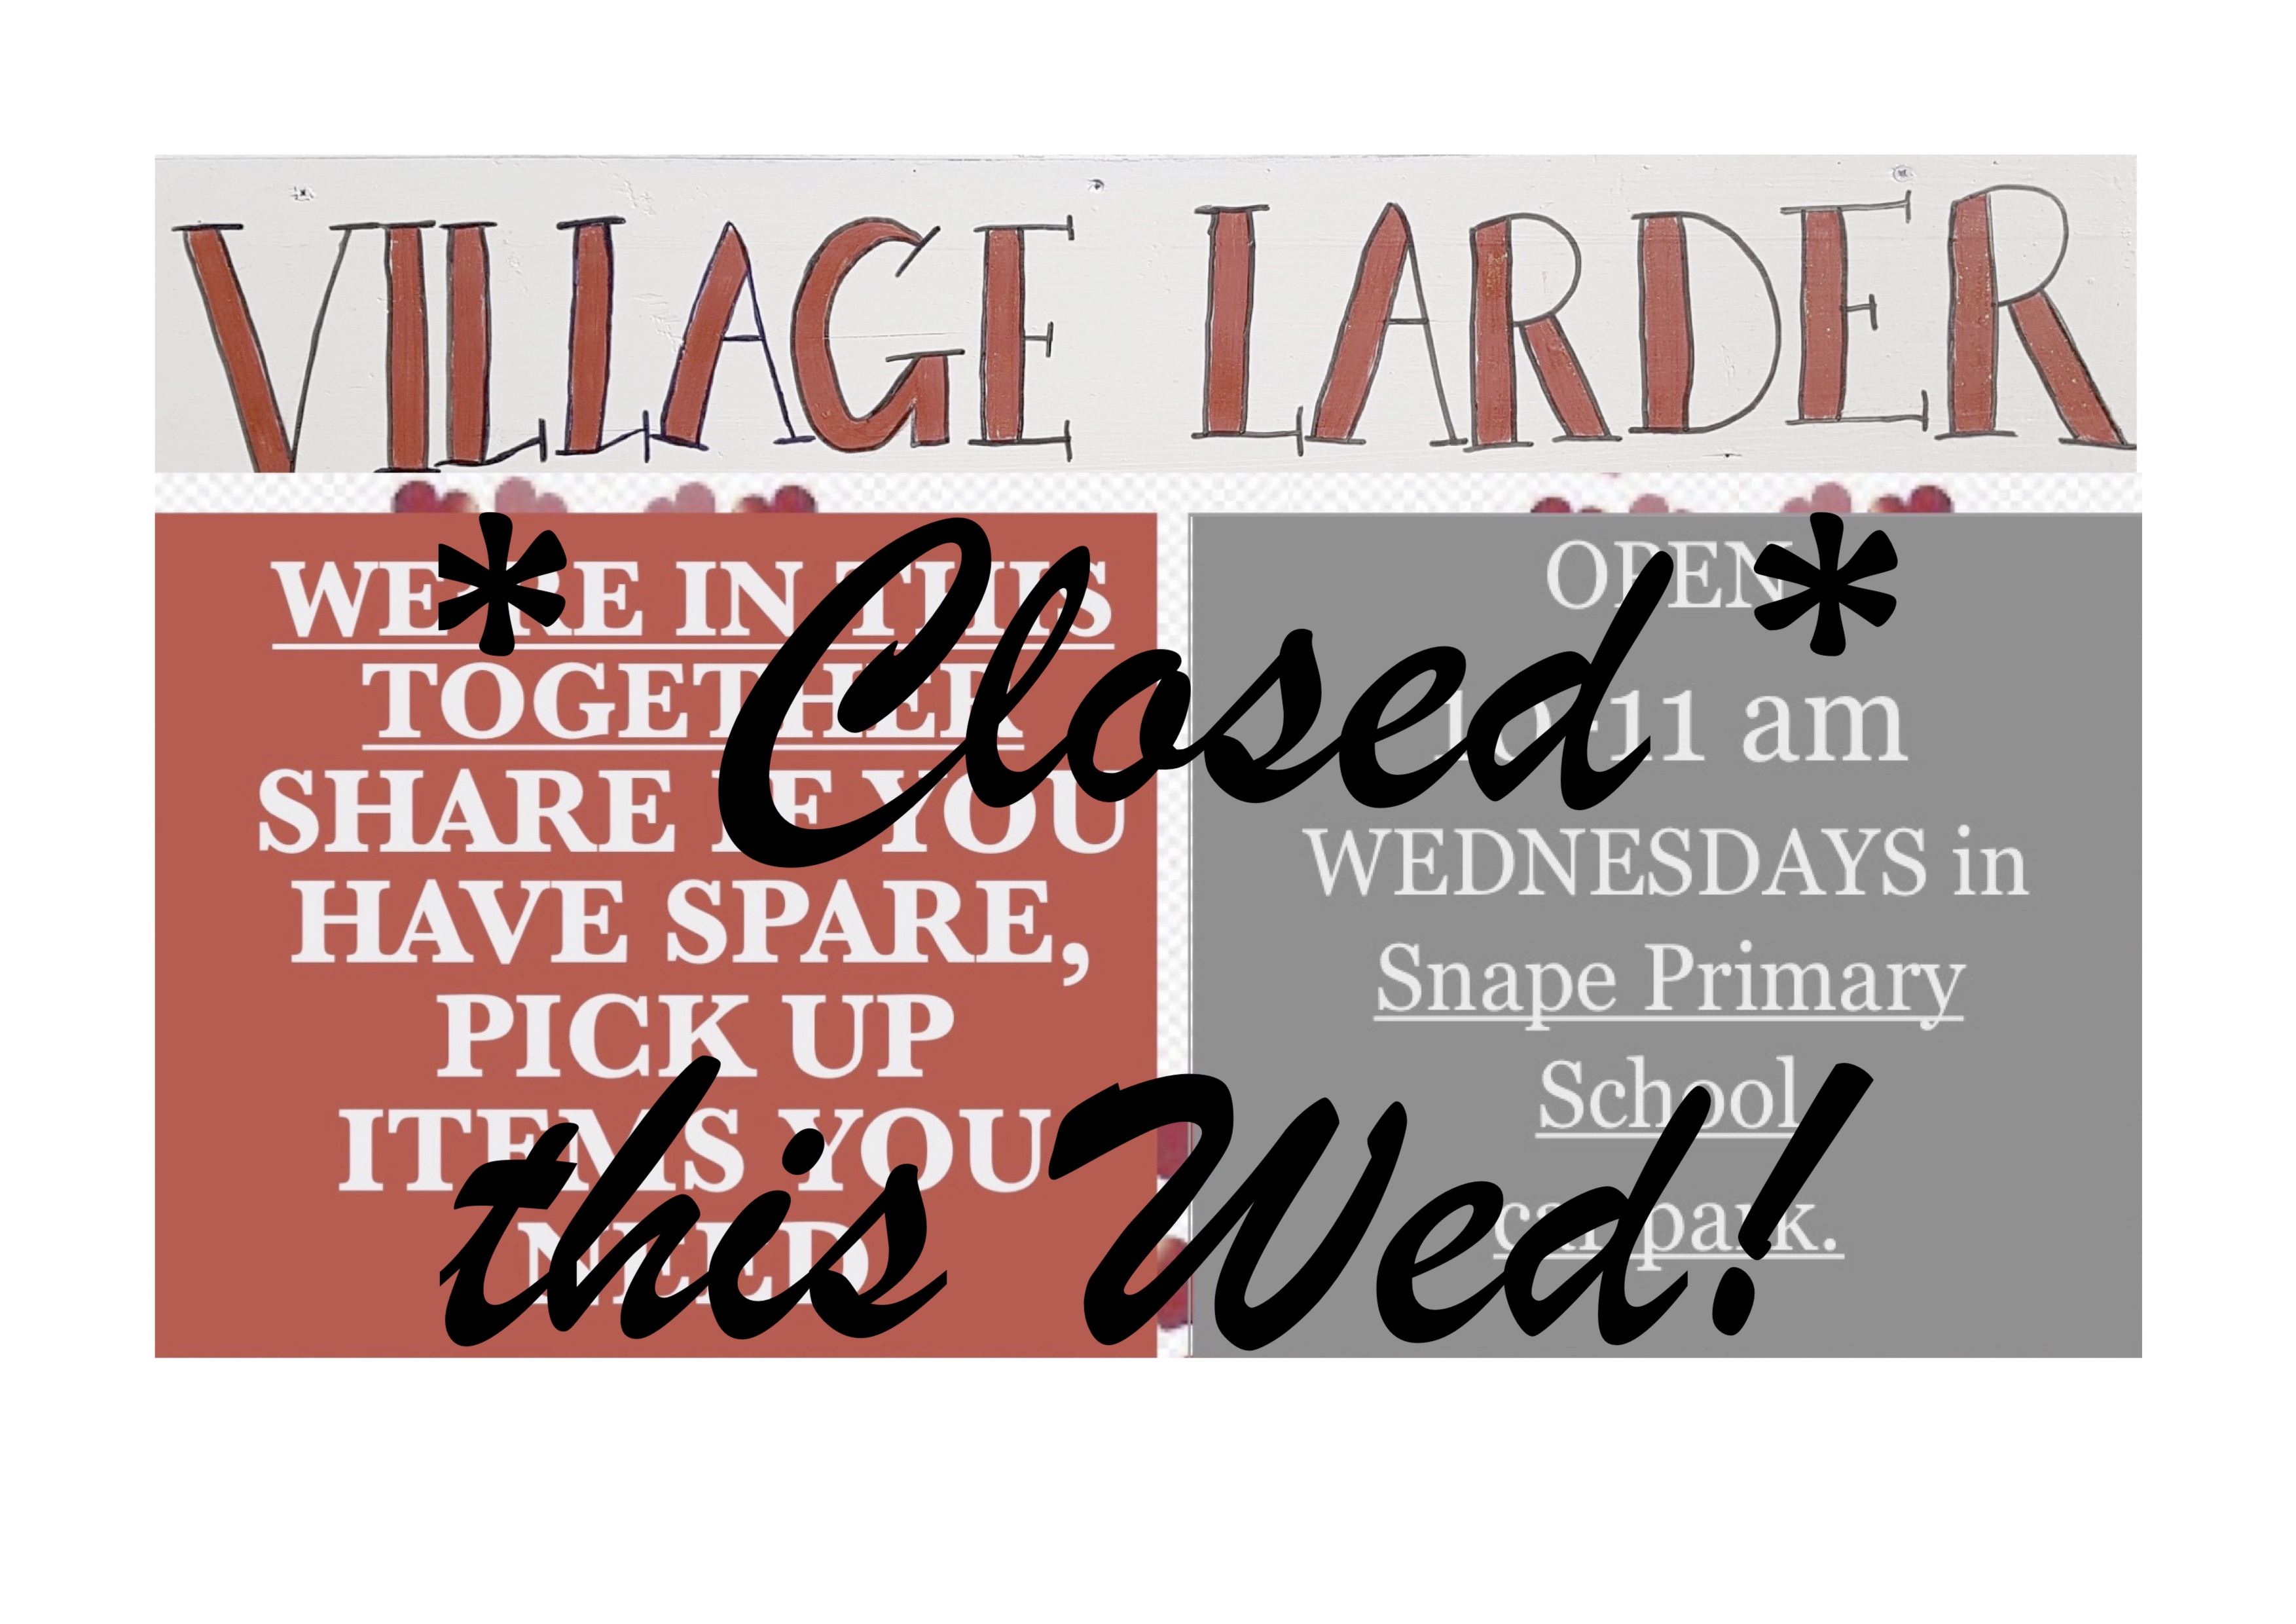 Village Larder closed this Wednesday